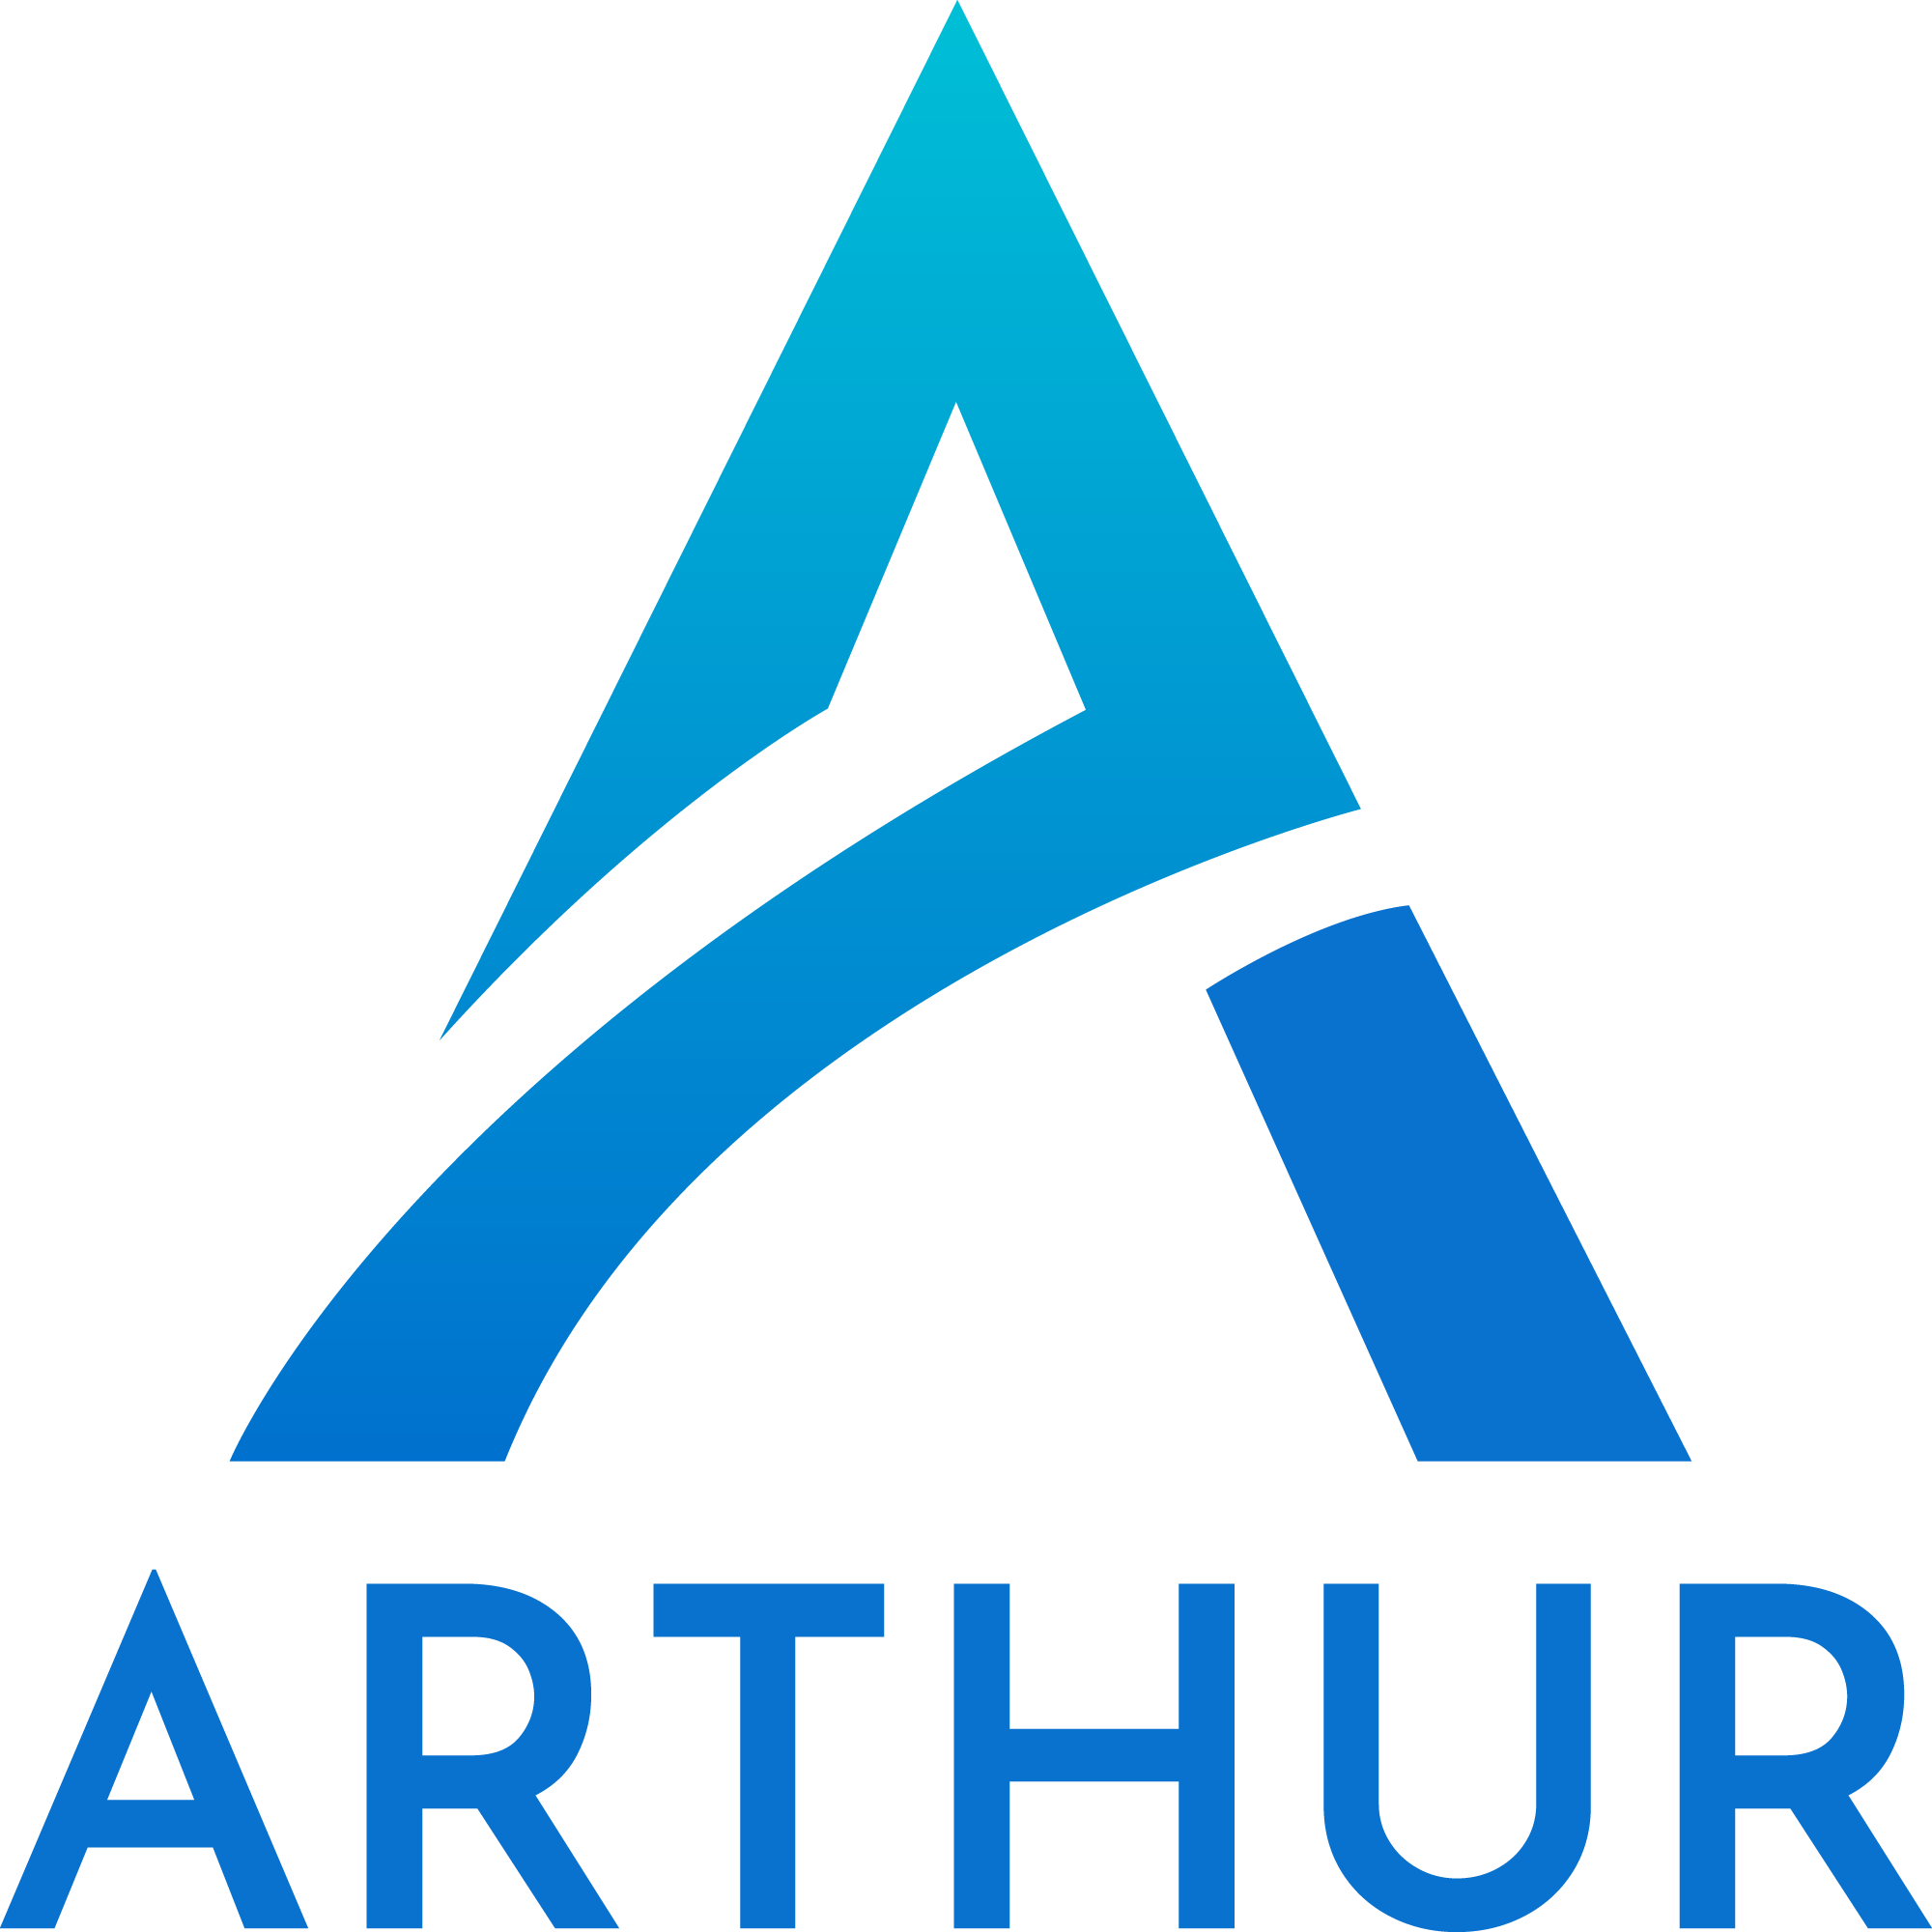 Arthur Online Logo